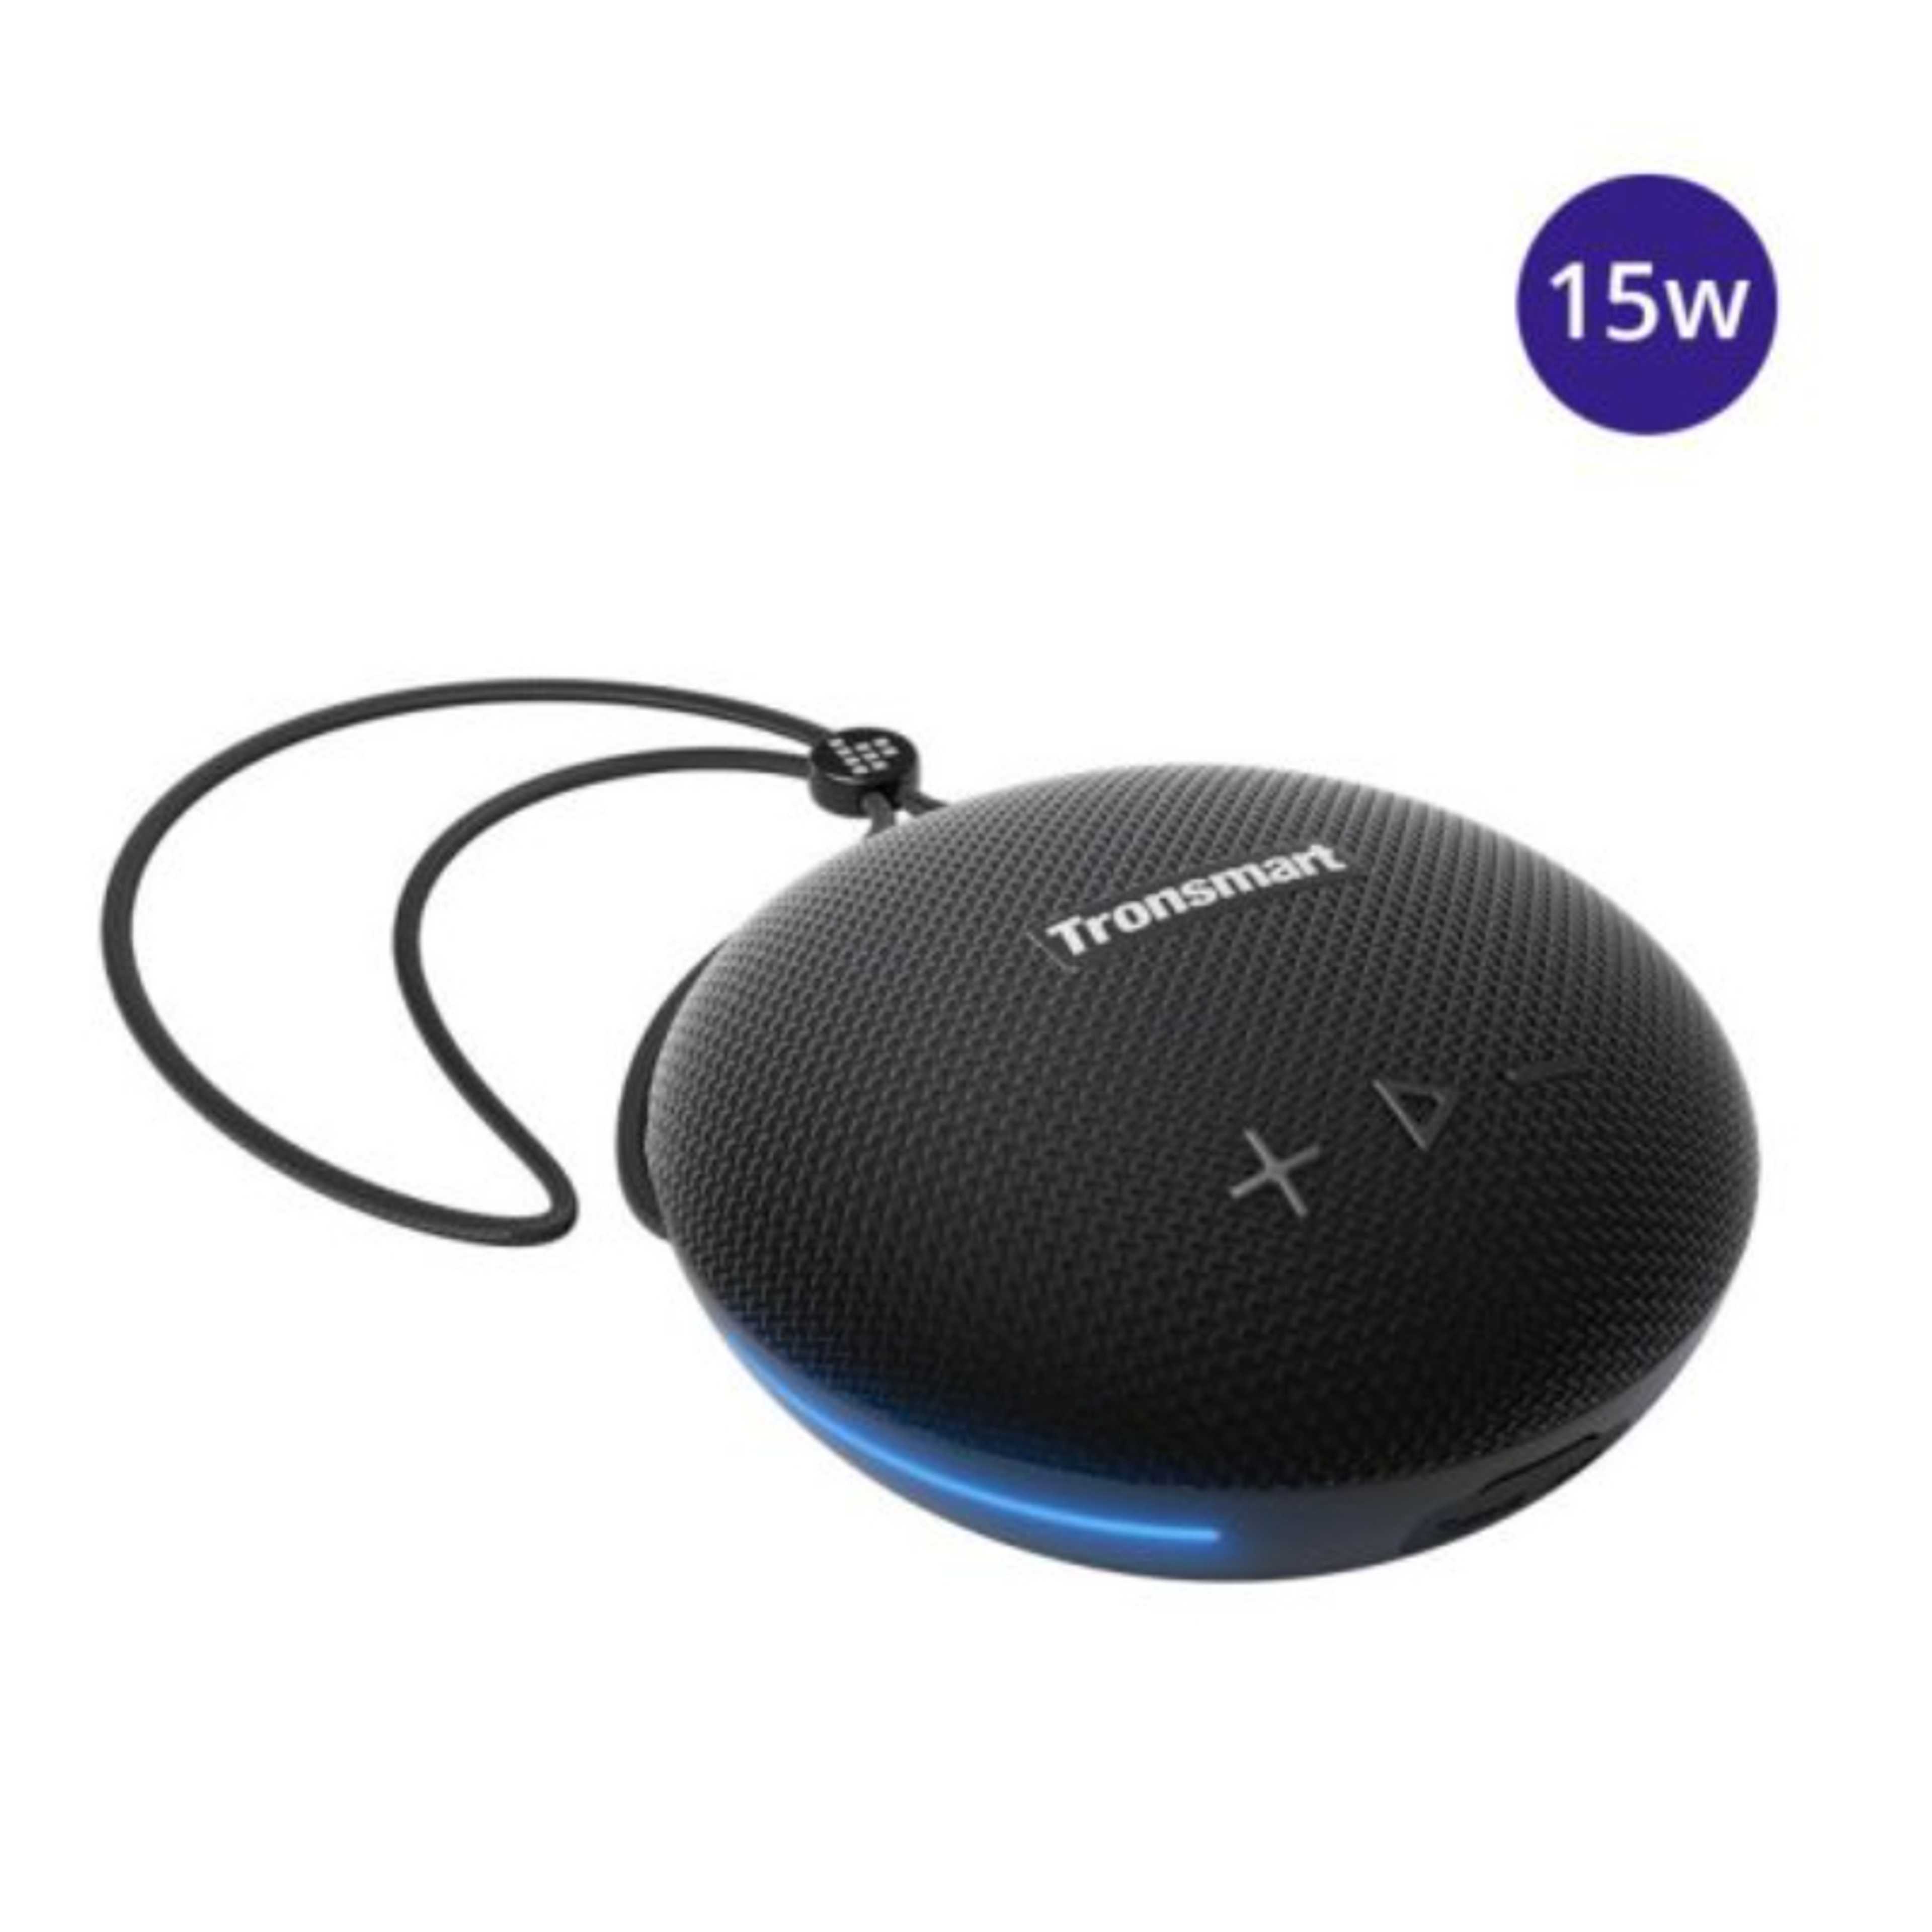 Tronsmart Splash 1 Bluetooth Speaker with True Wireless Stereo, Dual Drive, IPX7 Waterproof, 24-hour Playtime Portable Speaker